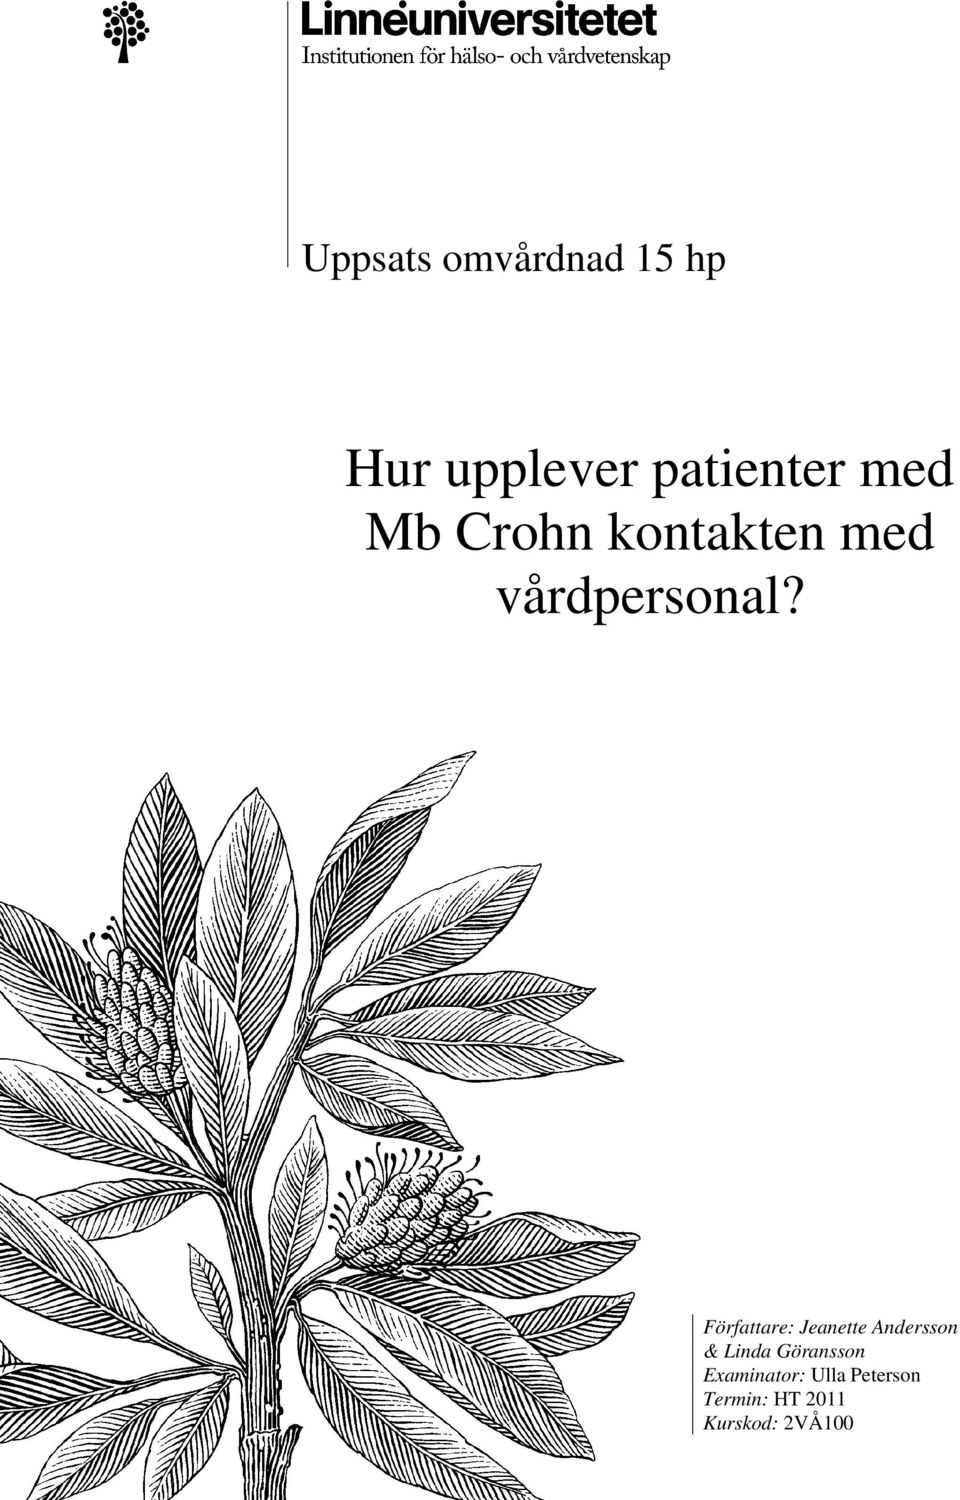 Författare: Jeanette Andersson & Linda Göransson